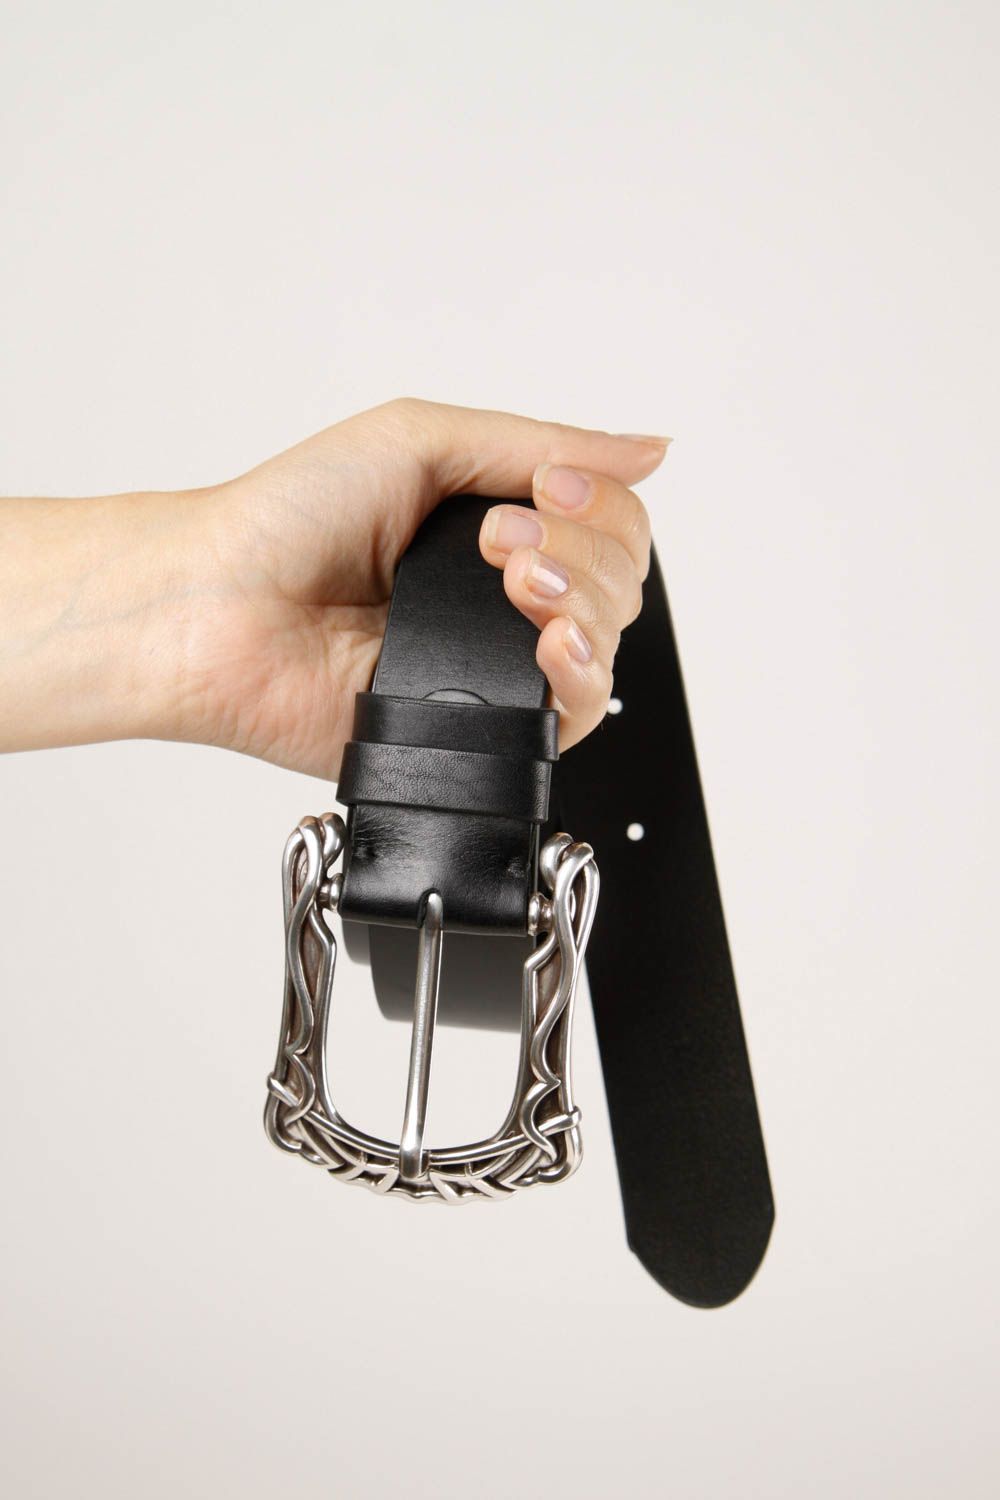 Cinturón de cuero natural ropa masculina hecha a mano accesorio de moda foto 2